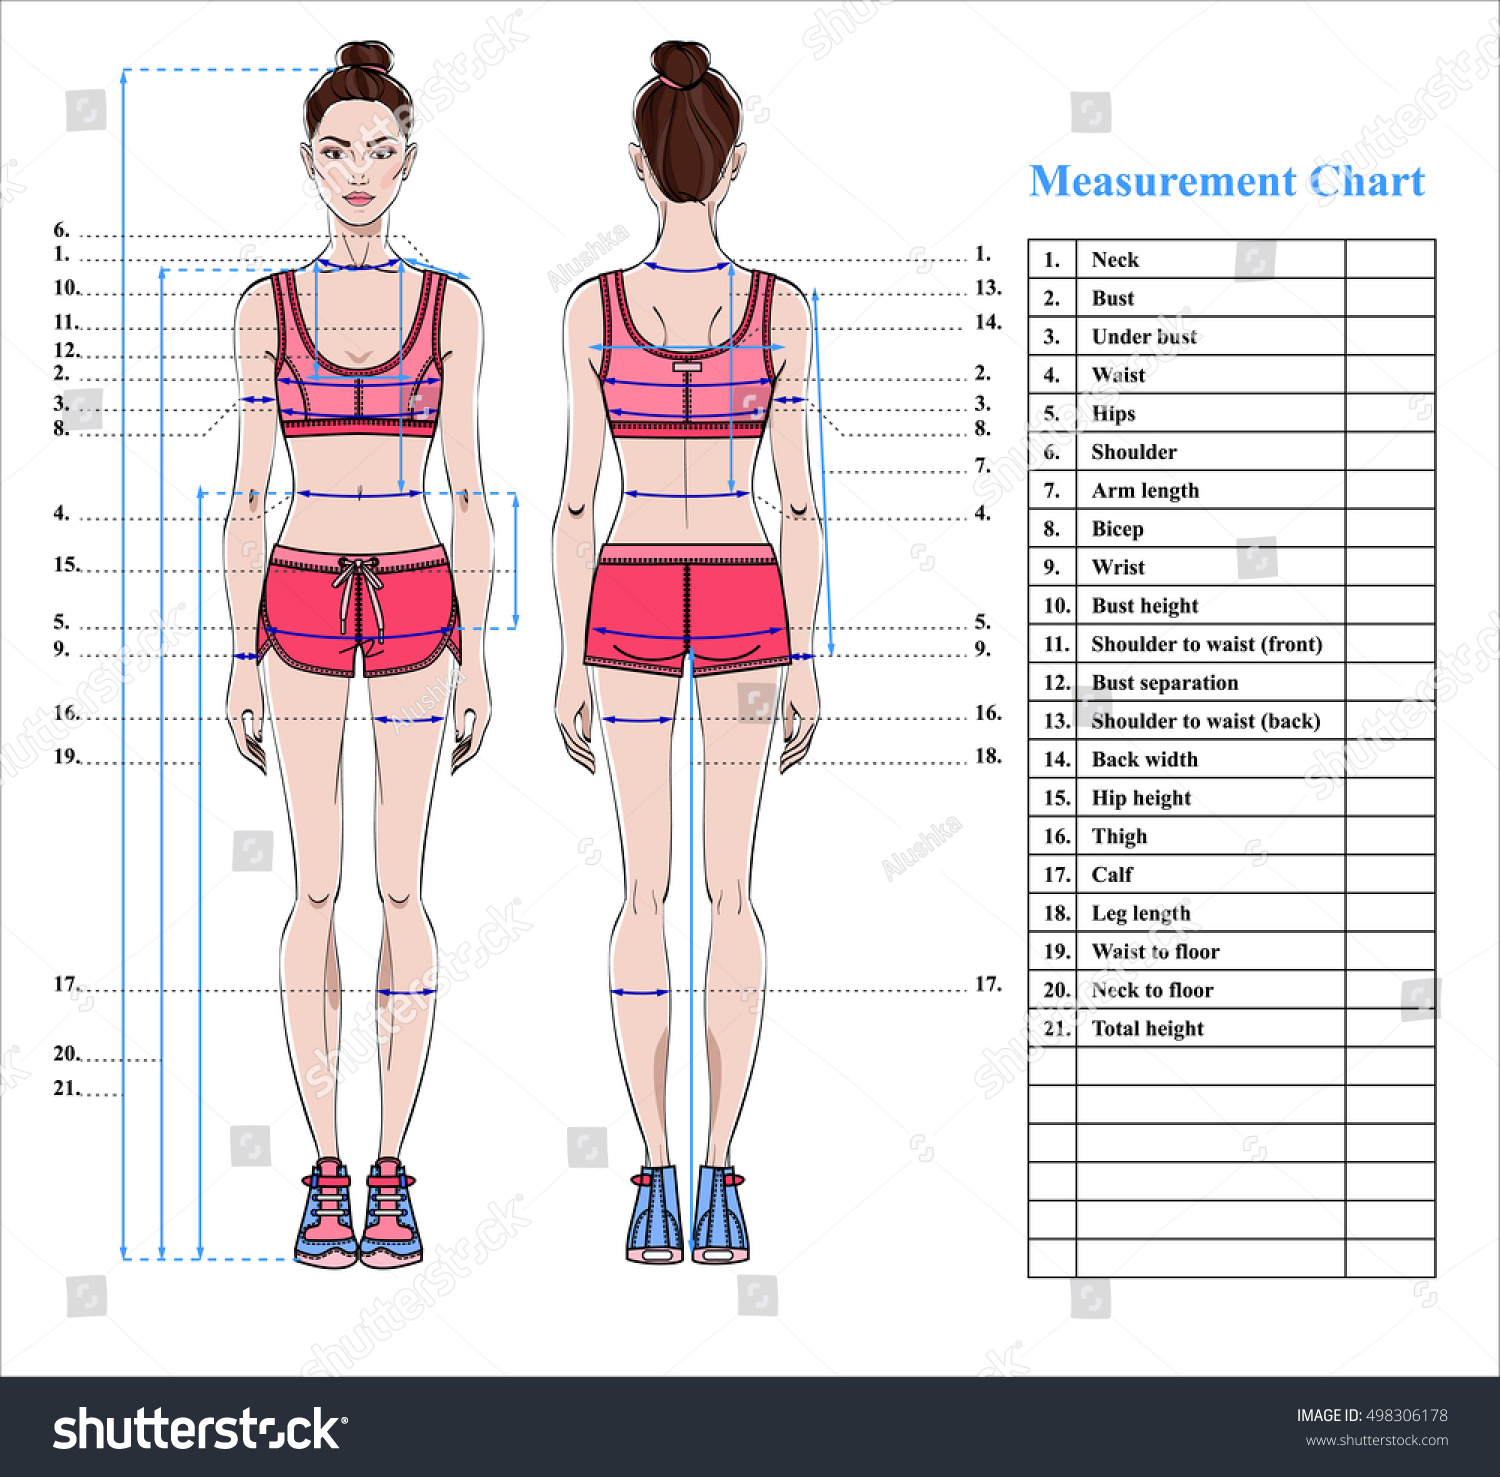 woman-body-measurement-chart-scheme-measurement